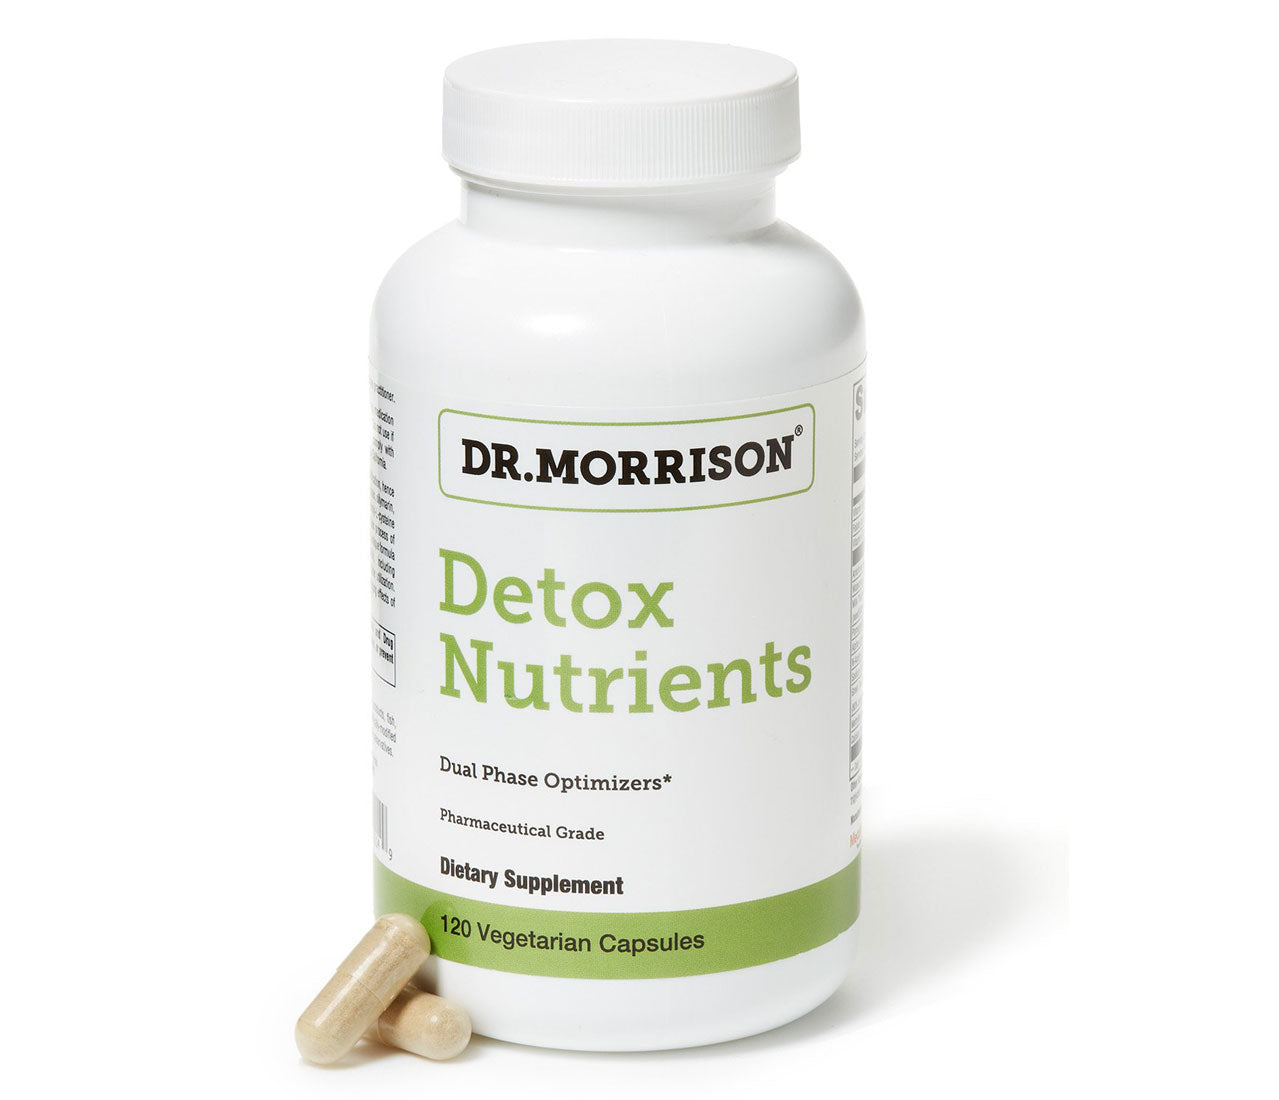 Detox Nutrients